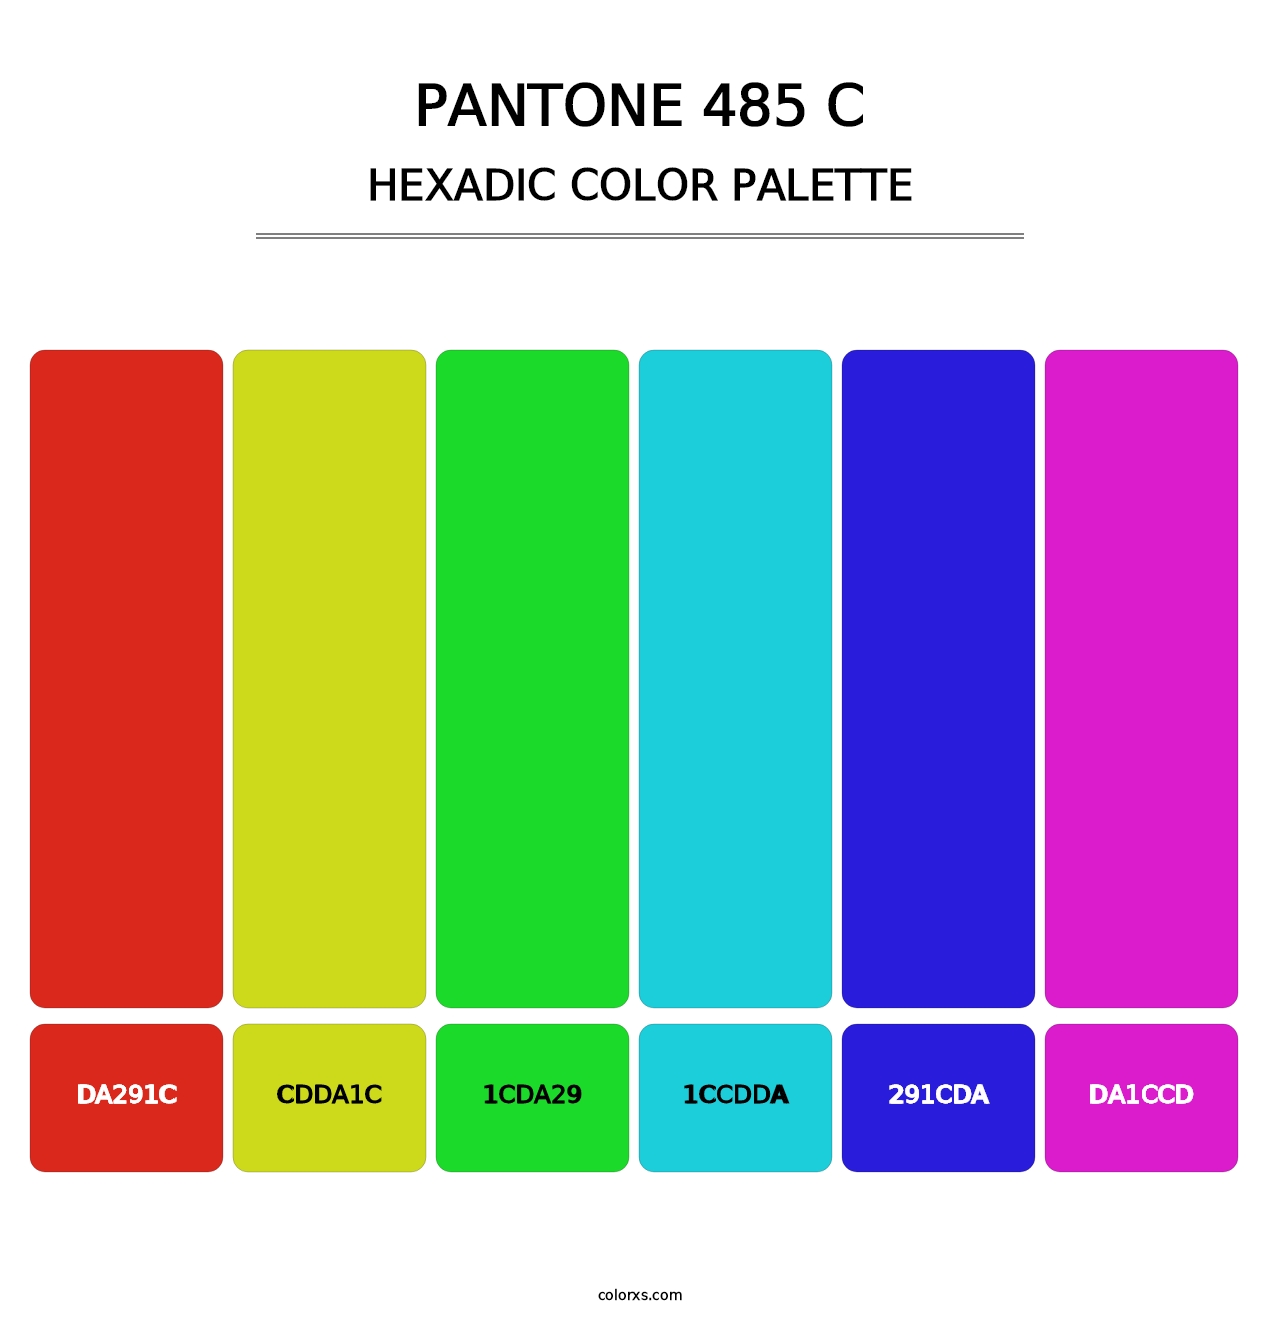 PANTONE 485 C - Hexadic Color Palette